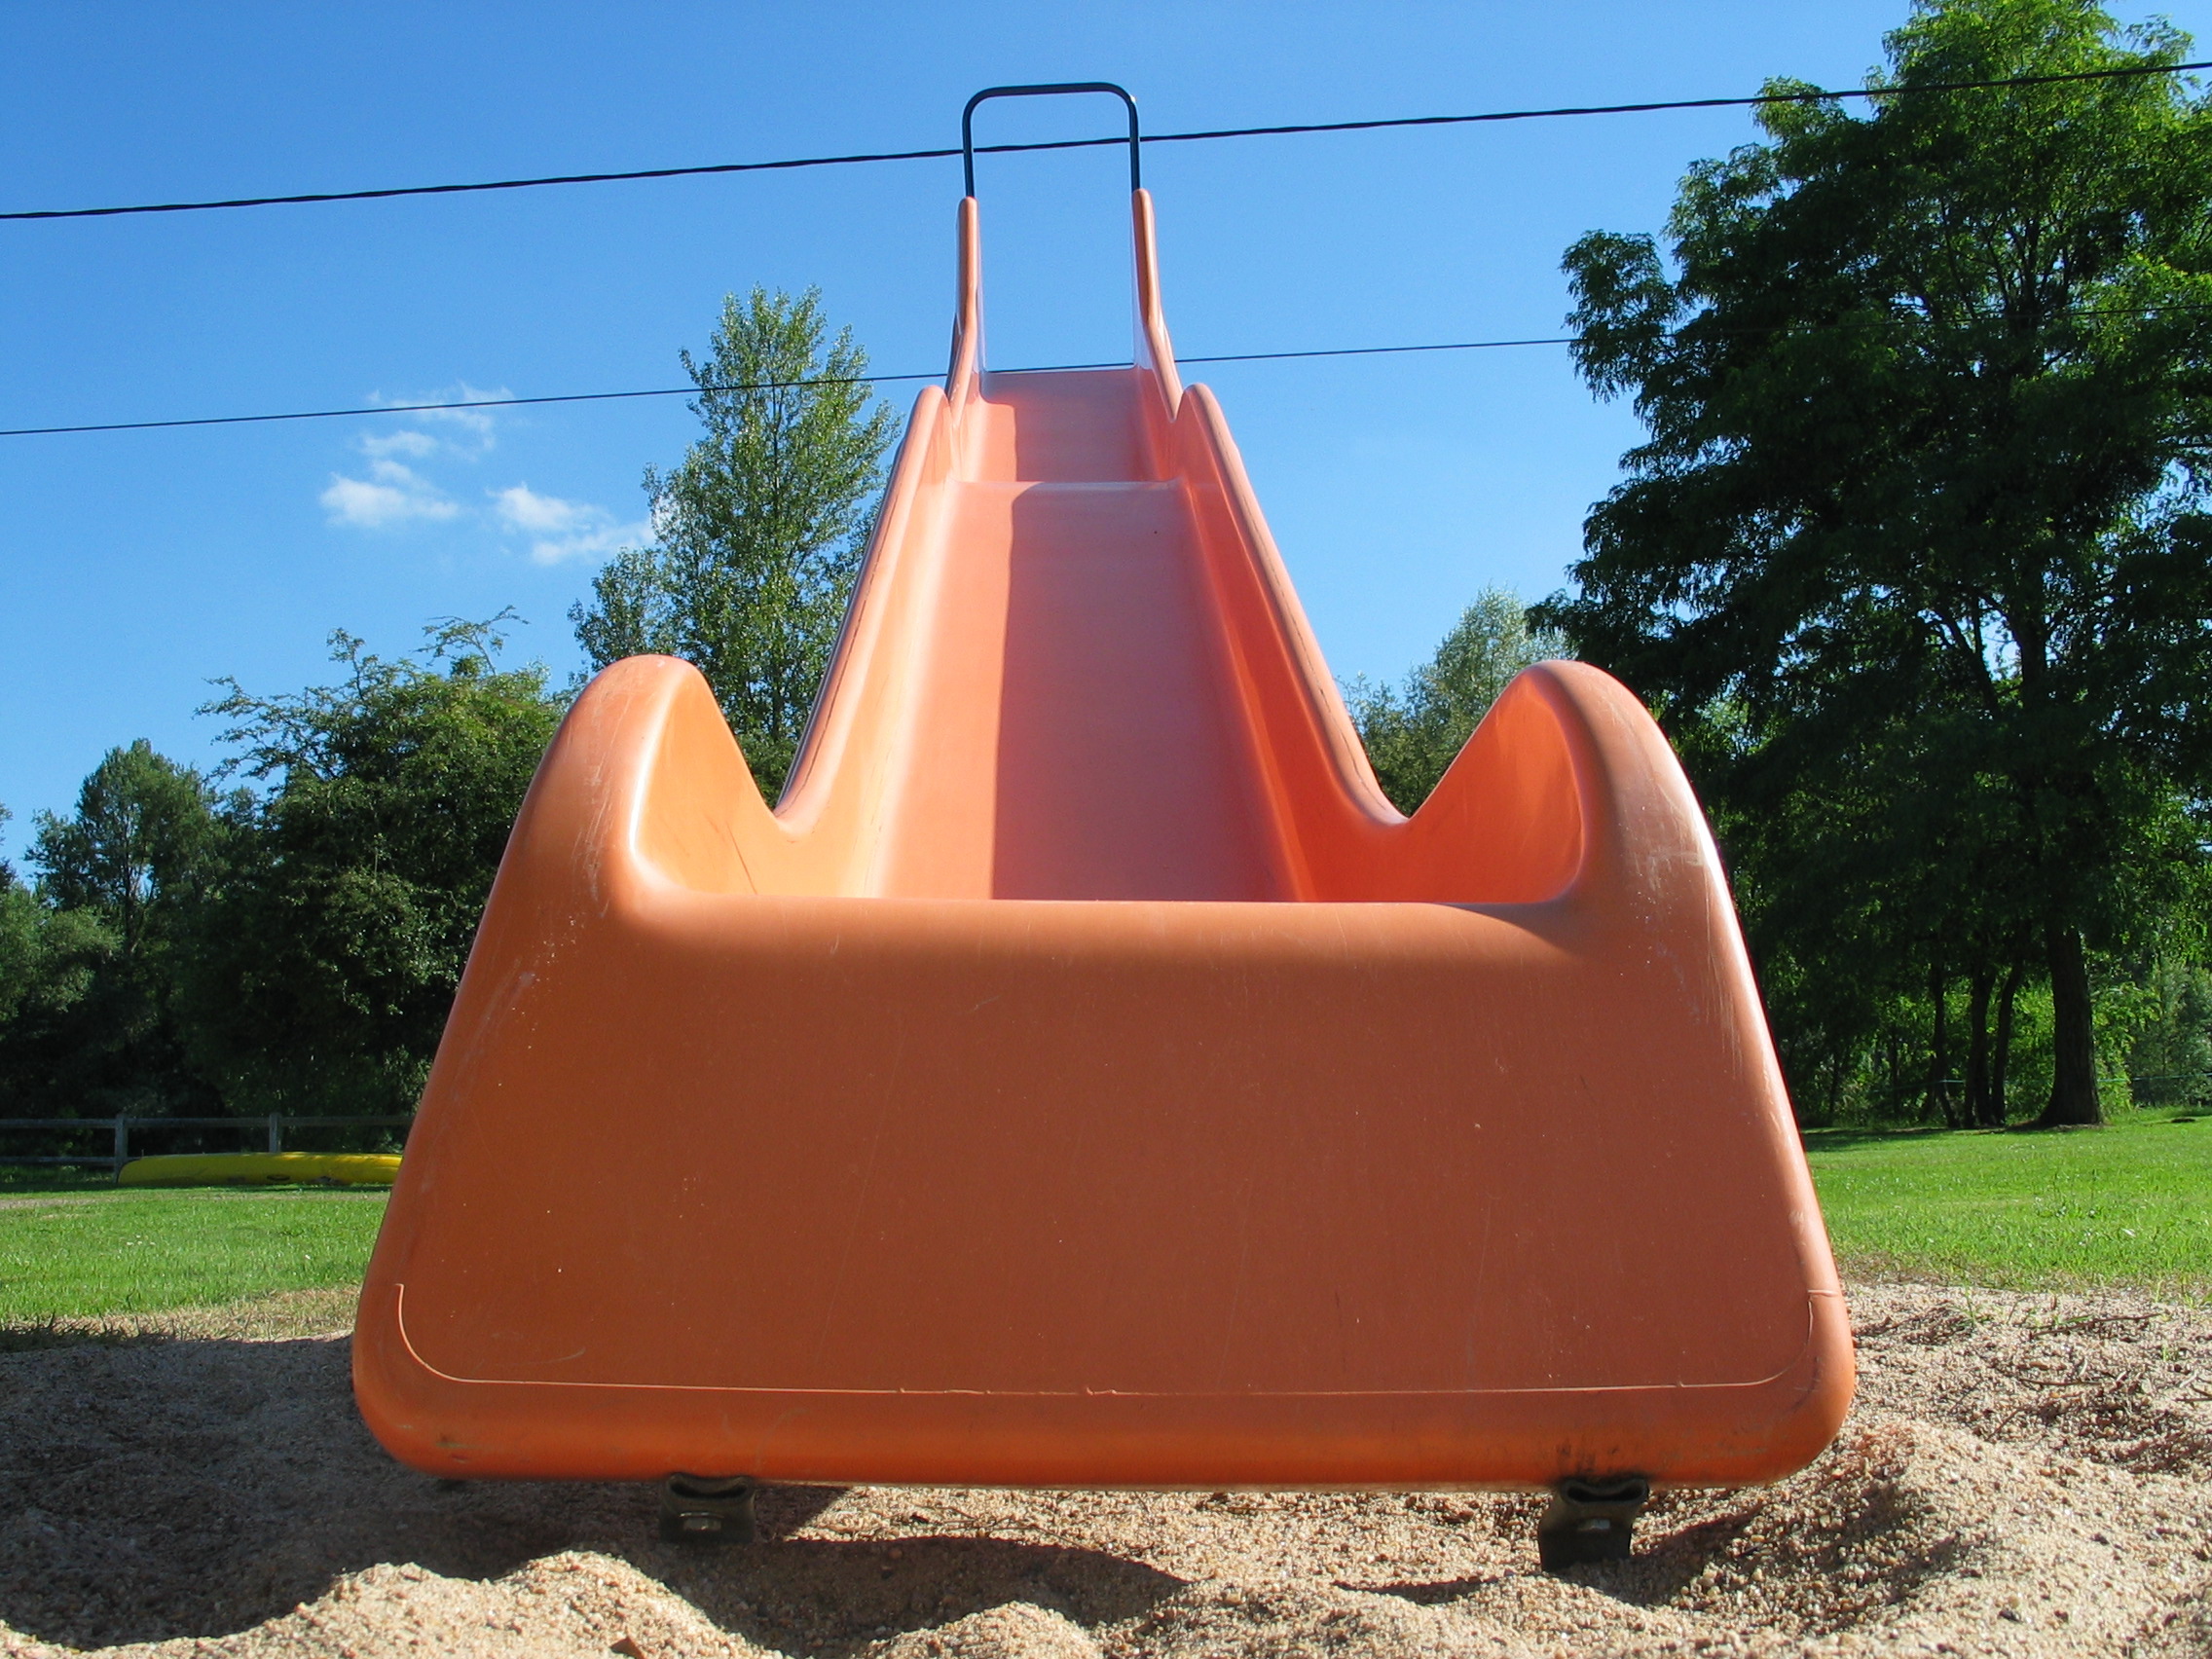 File:Playground slide close-up.jpg - Wikimedia Commons